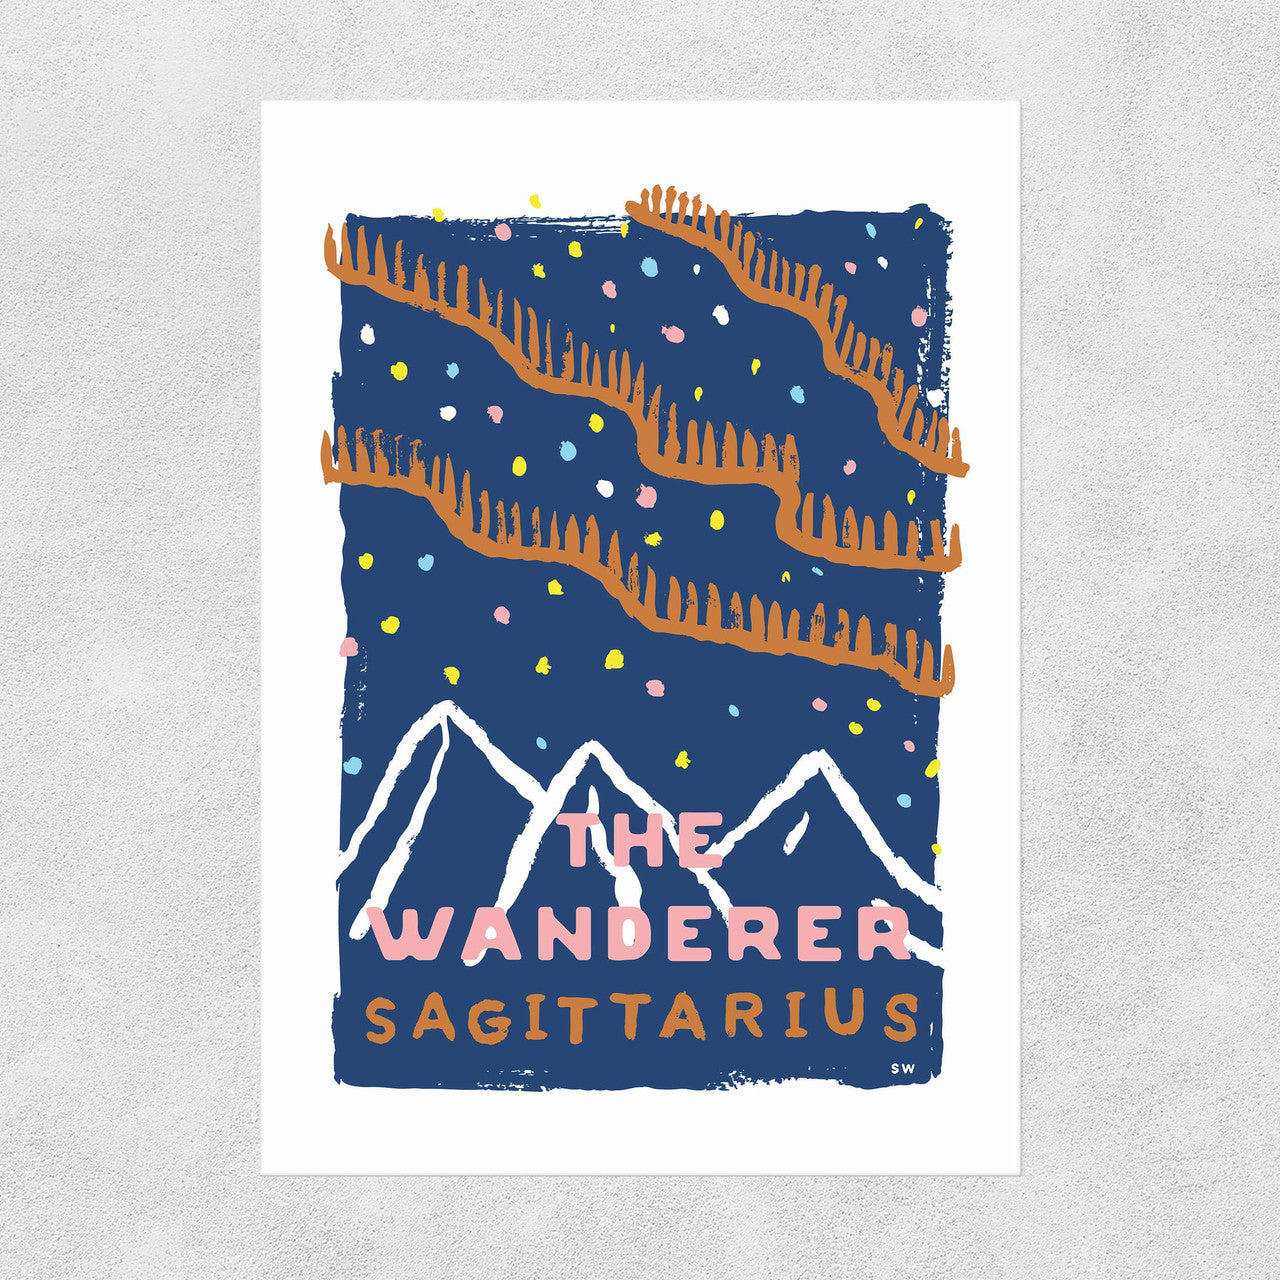 Sagittarius: The Wanderer A3 Print